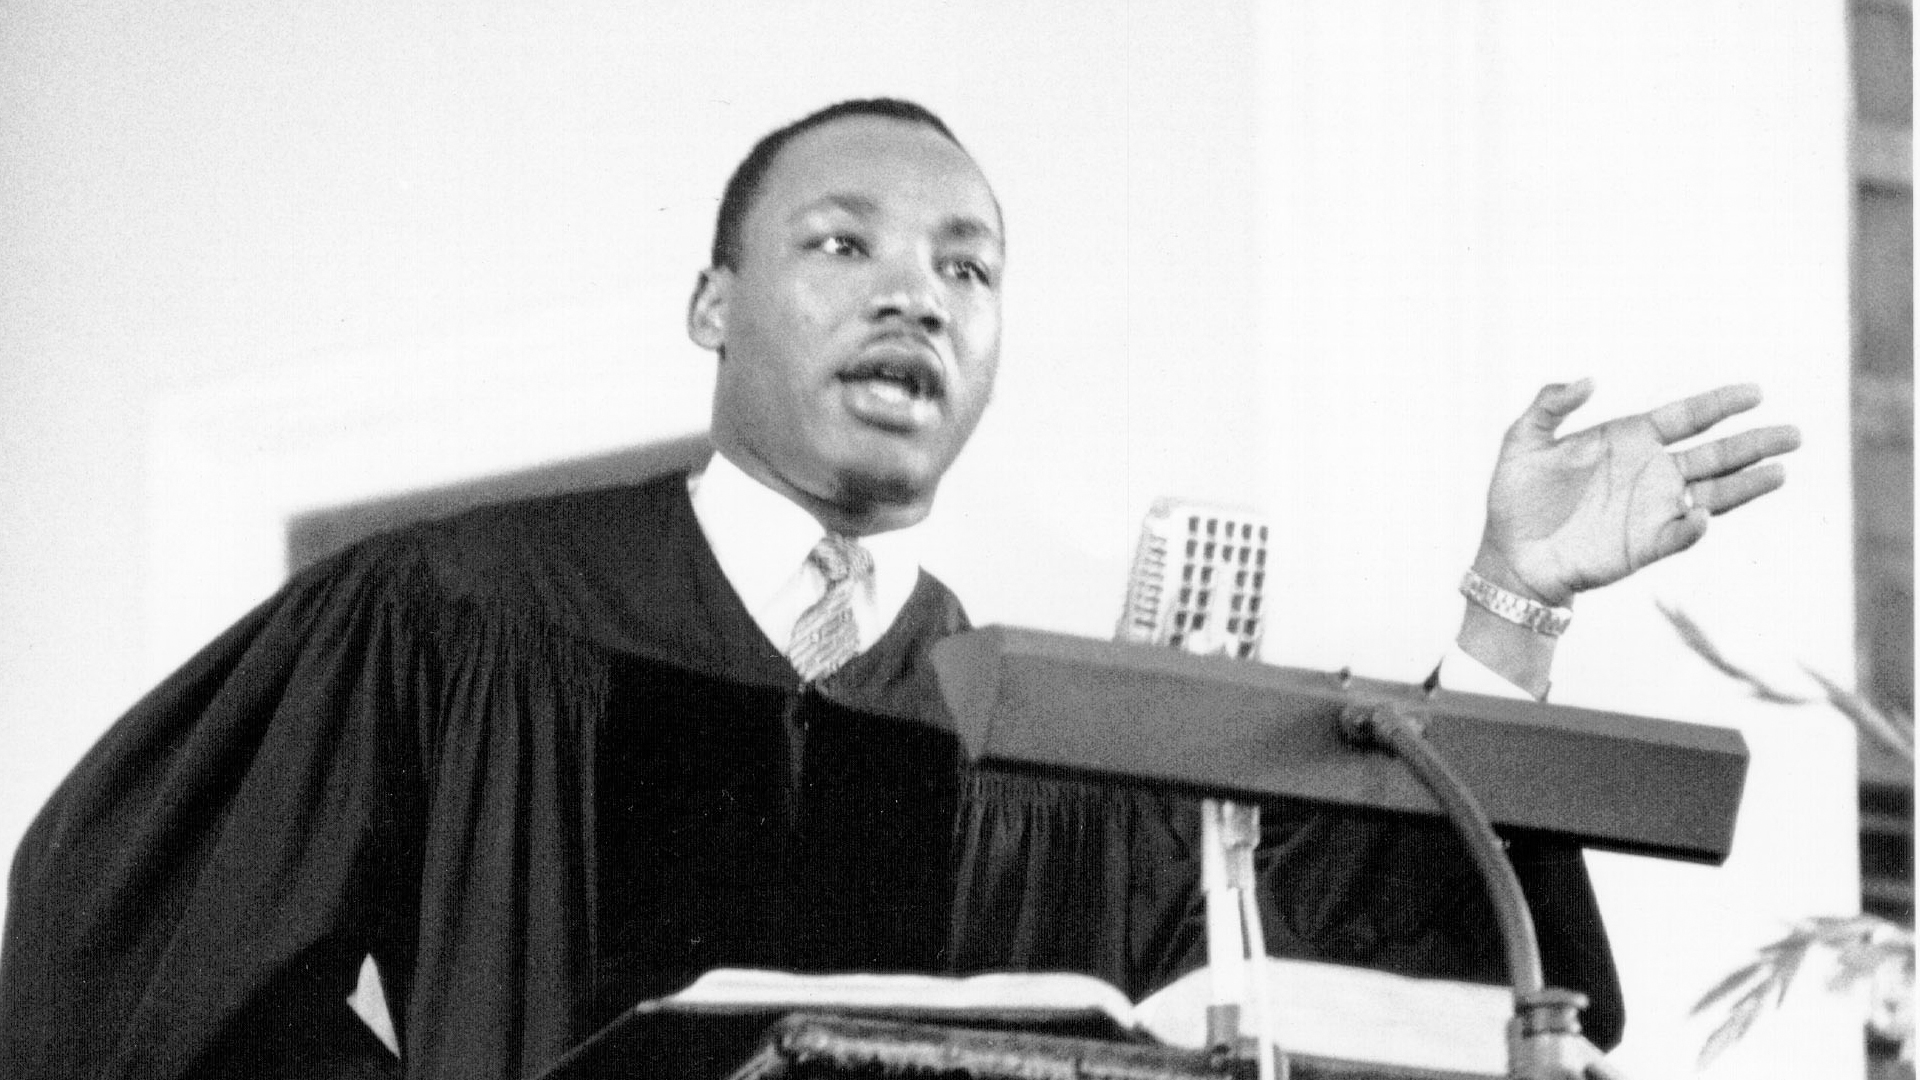 Martin Luther King Jr. – Pastor